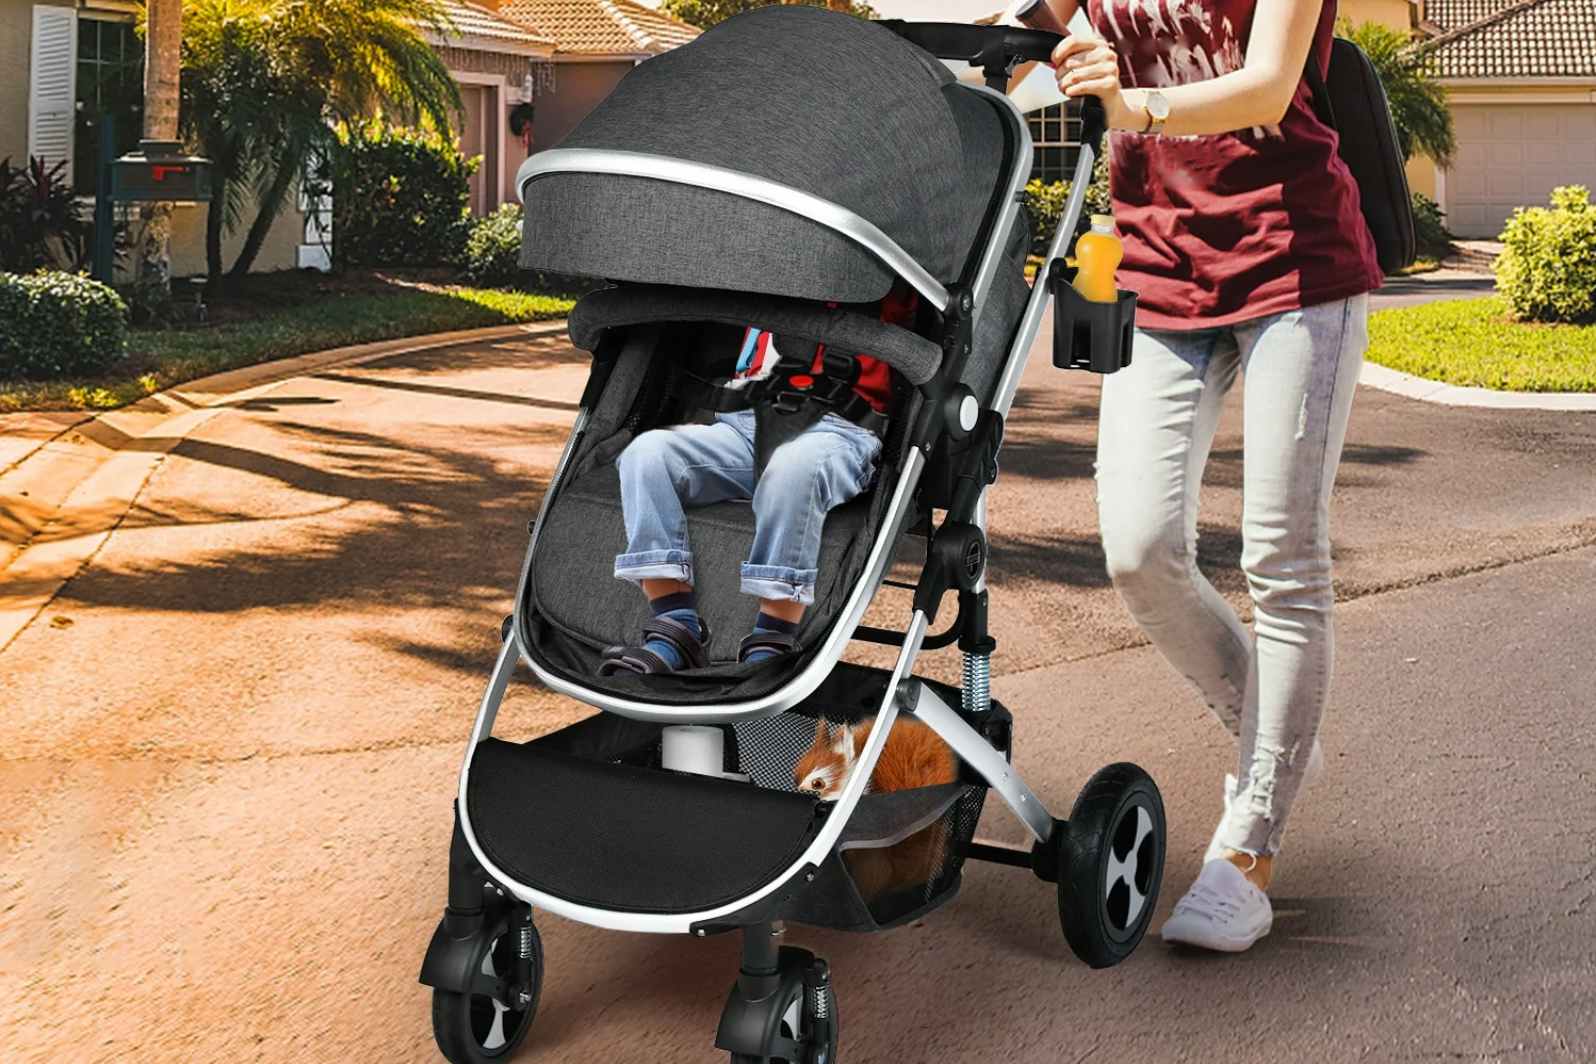 Convertible 2-in-1 Baby Stroller, $115 at Walmart